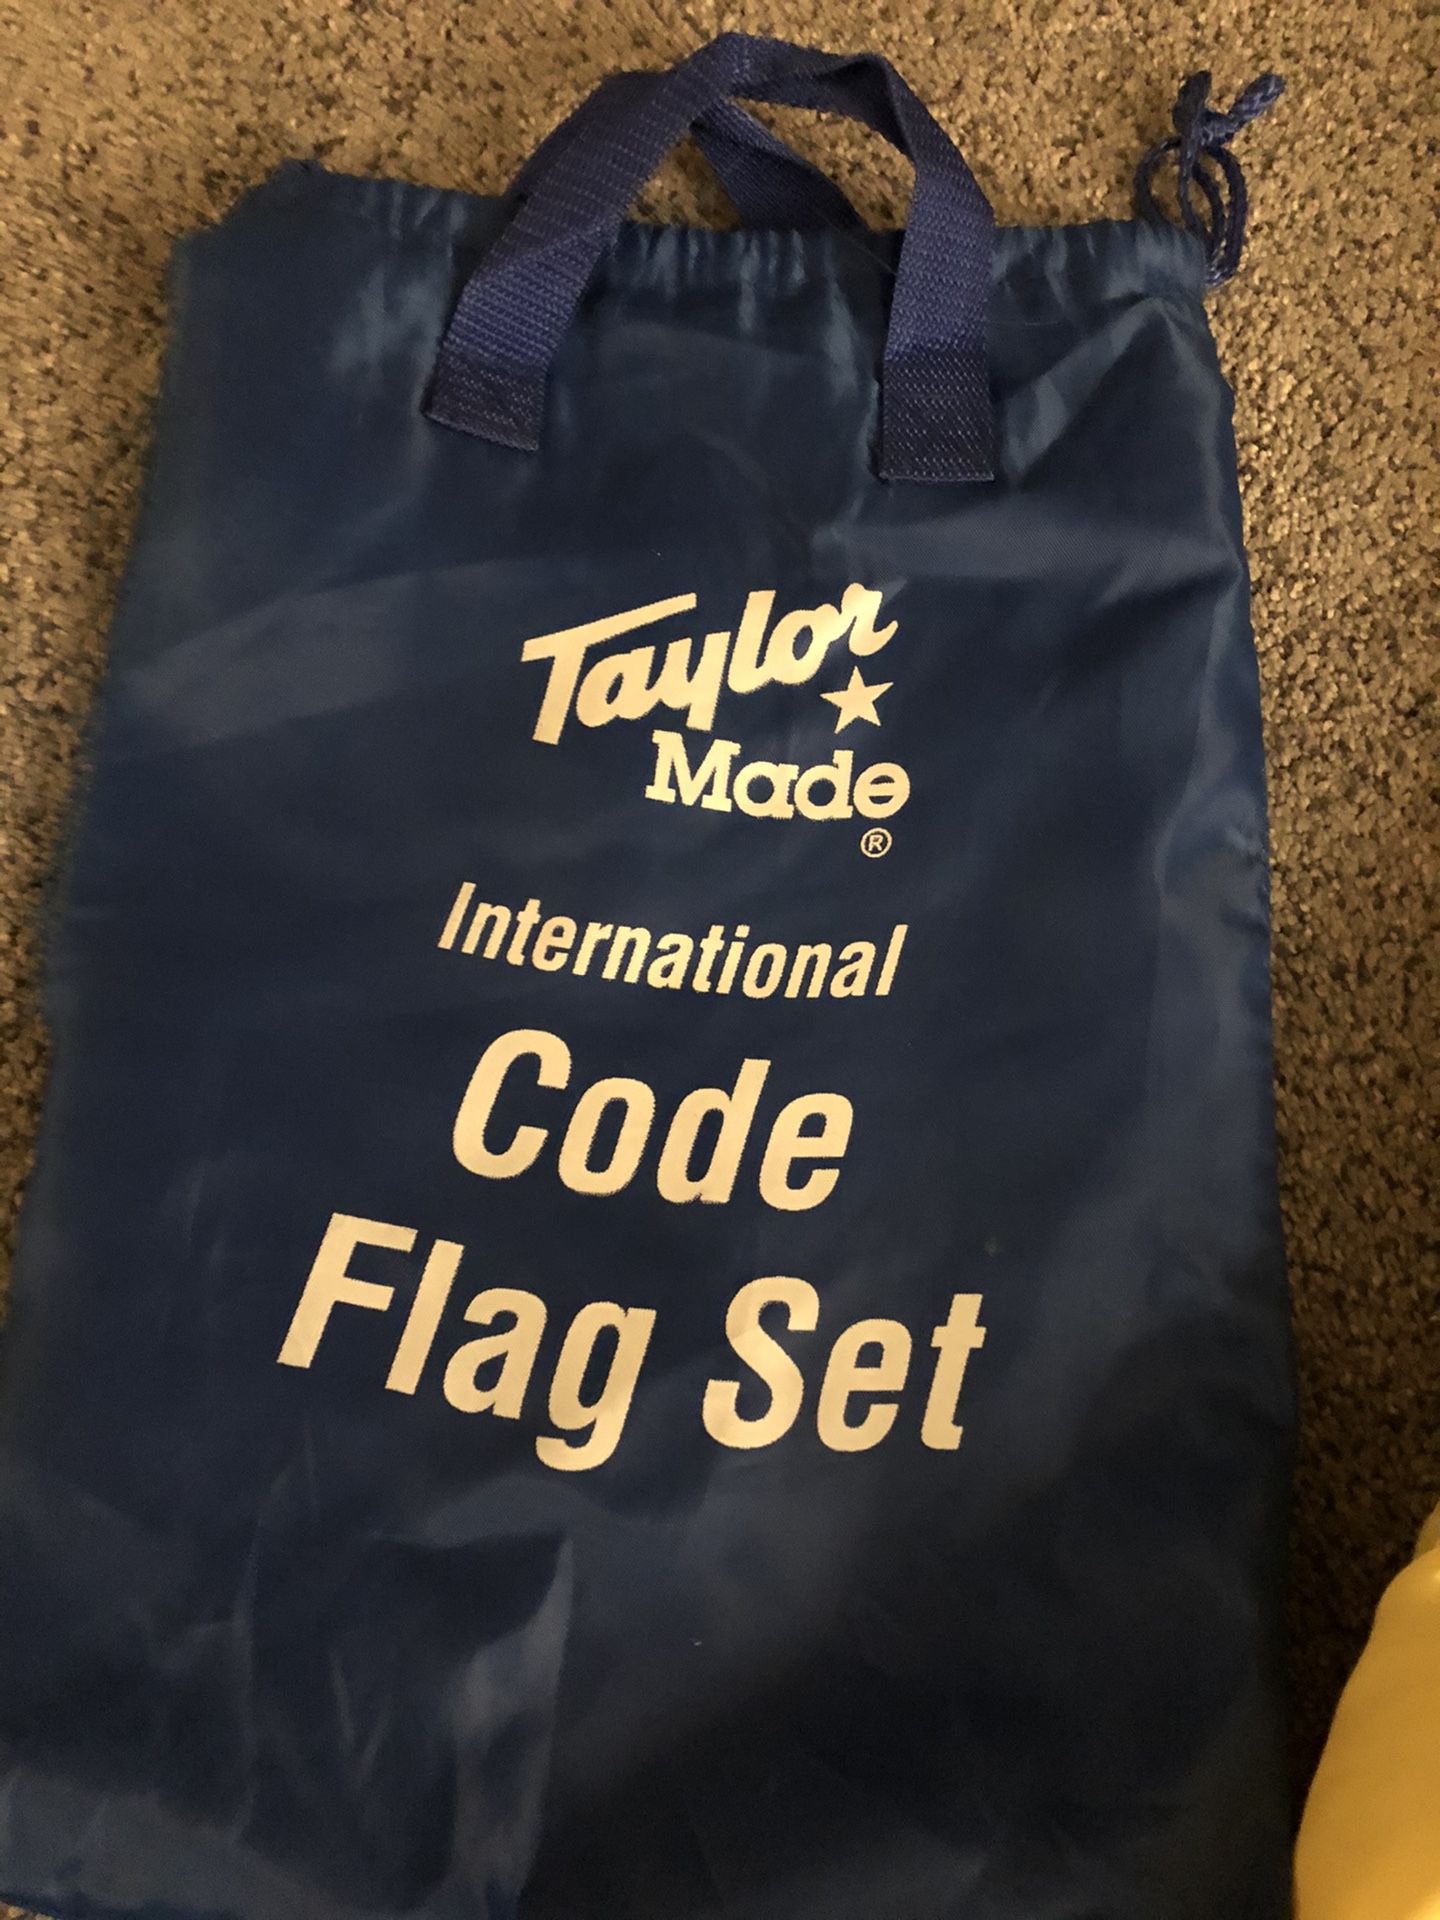 International Code Flag Set